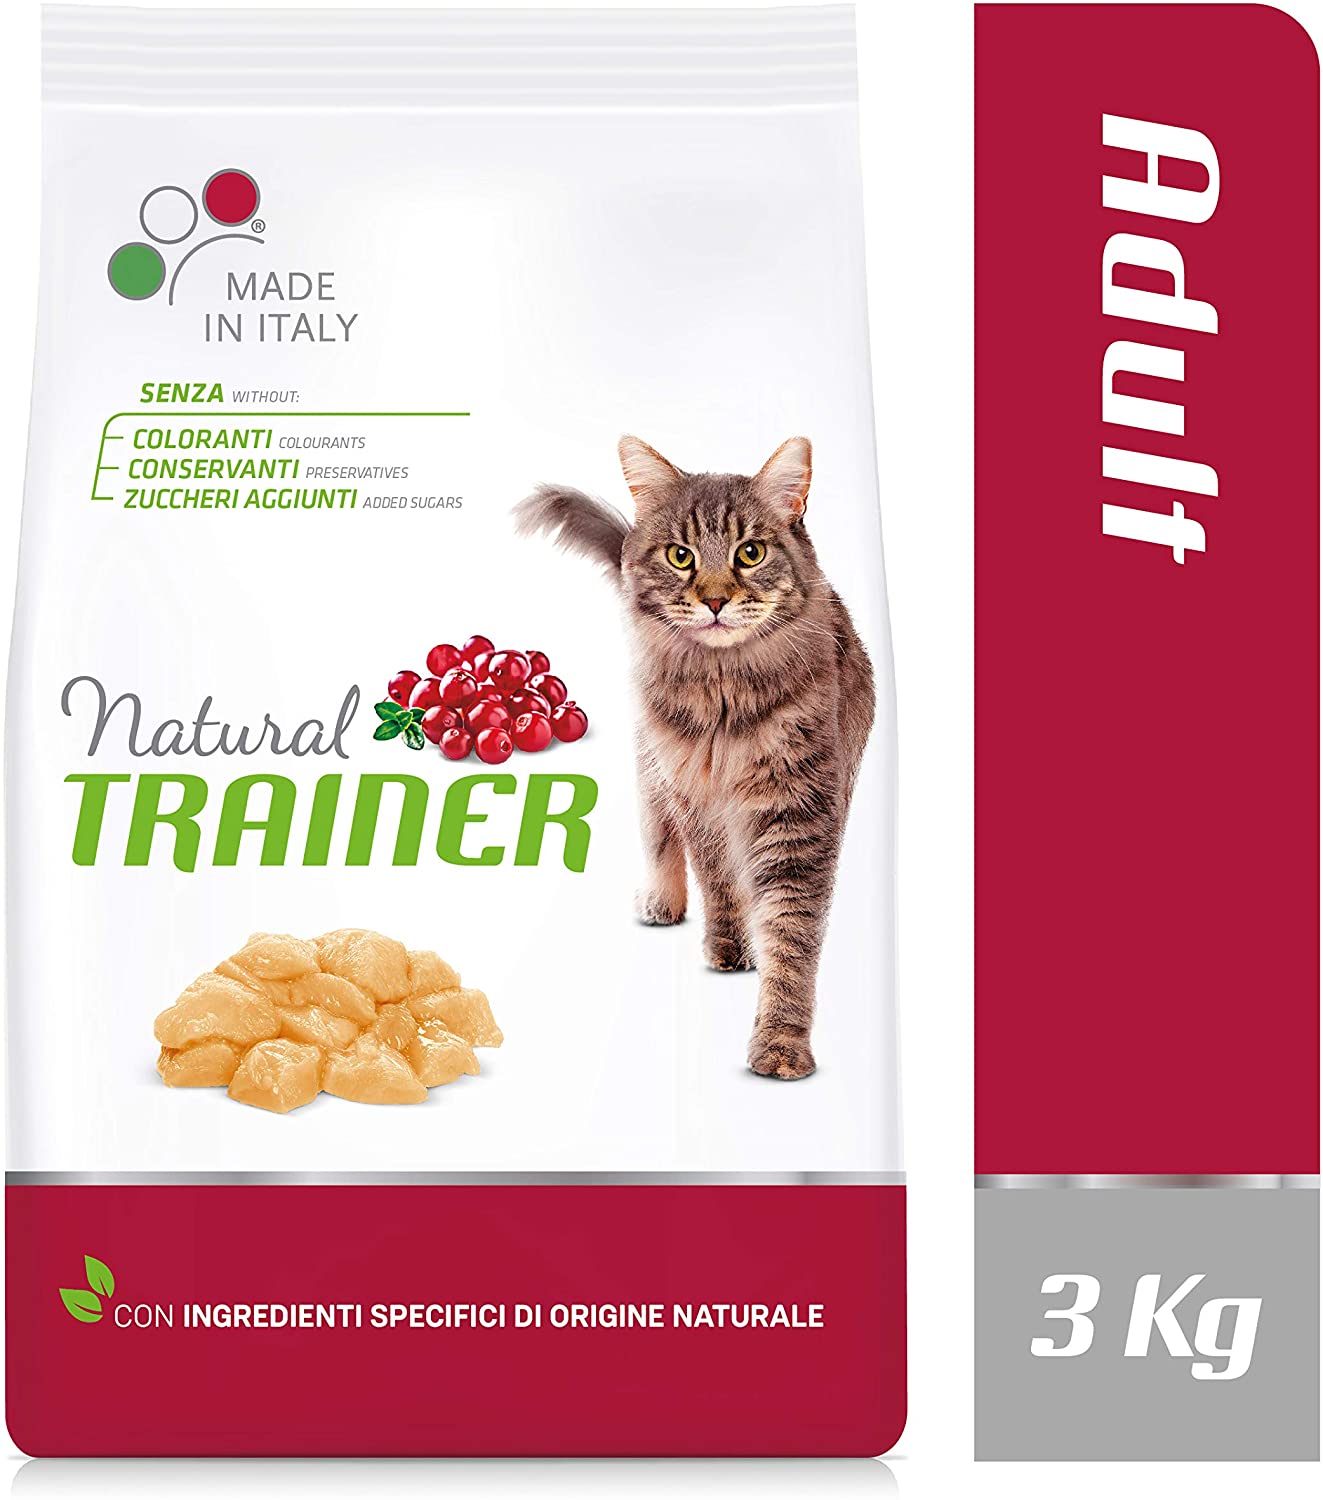  Natural Trainer Trainer Natural con Pollo Fresco 3 kg-mangimi Cubos para Gatos Comida, única 